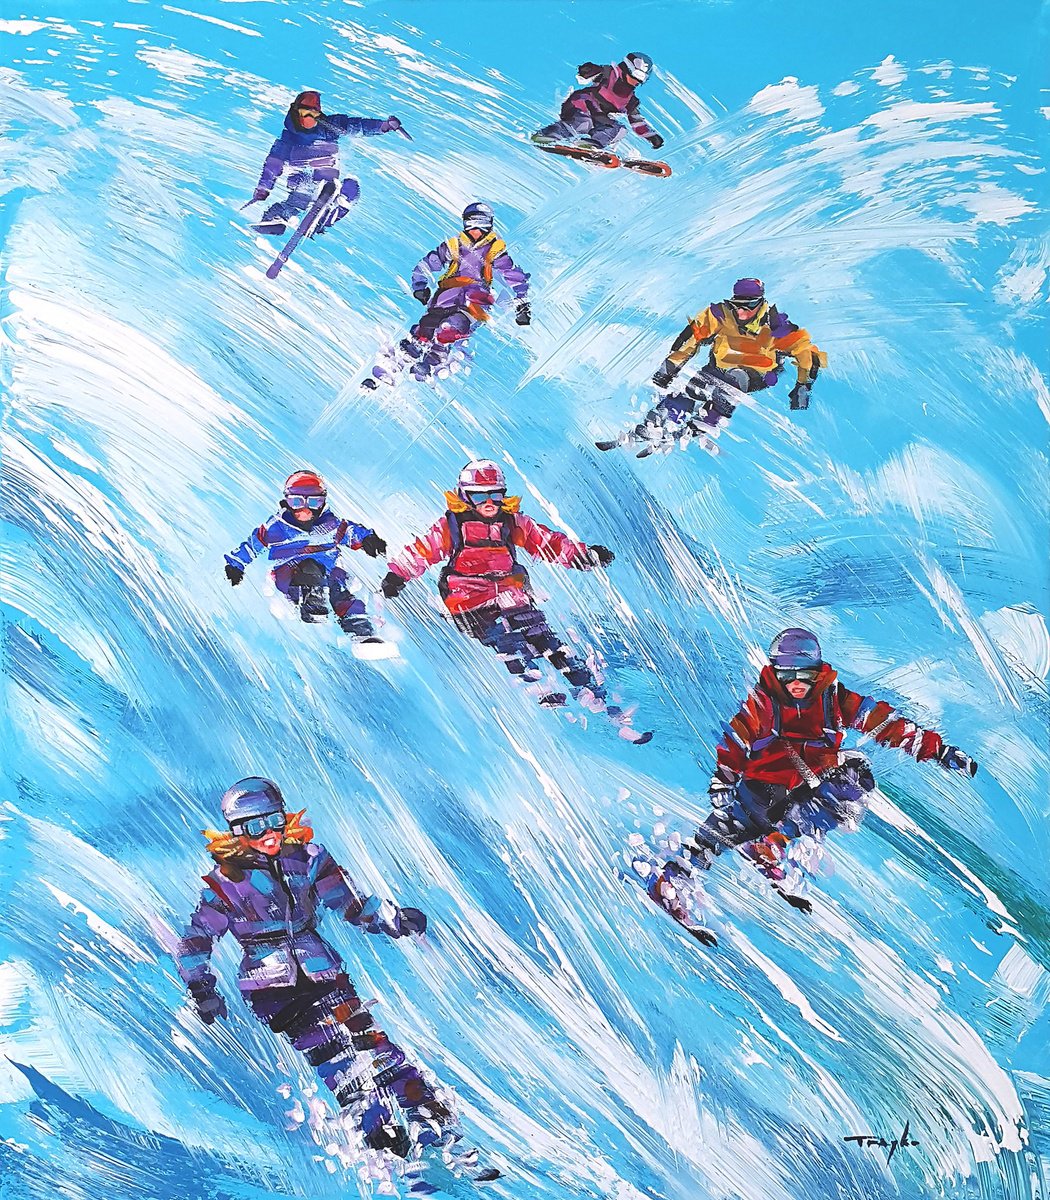 Ski Competition | Skiers by Trayko Popov